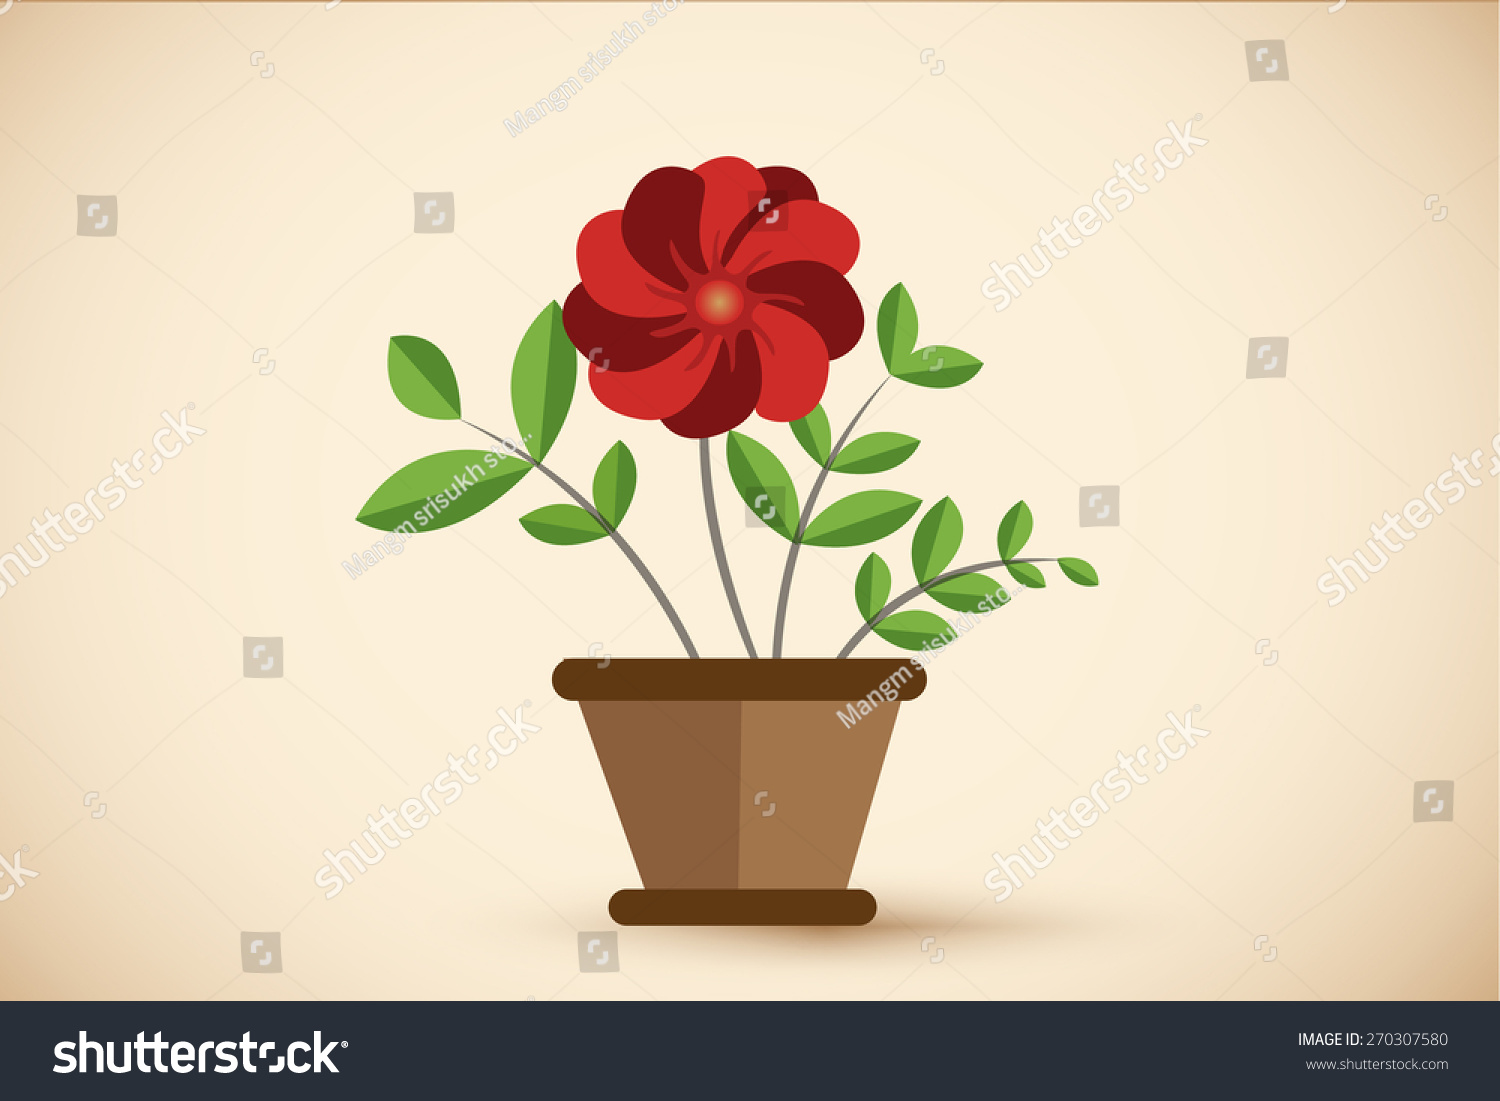 Flower Pot Vector Stock Vector 270307580 - Shutterstock